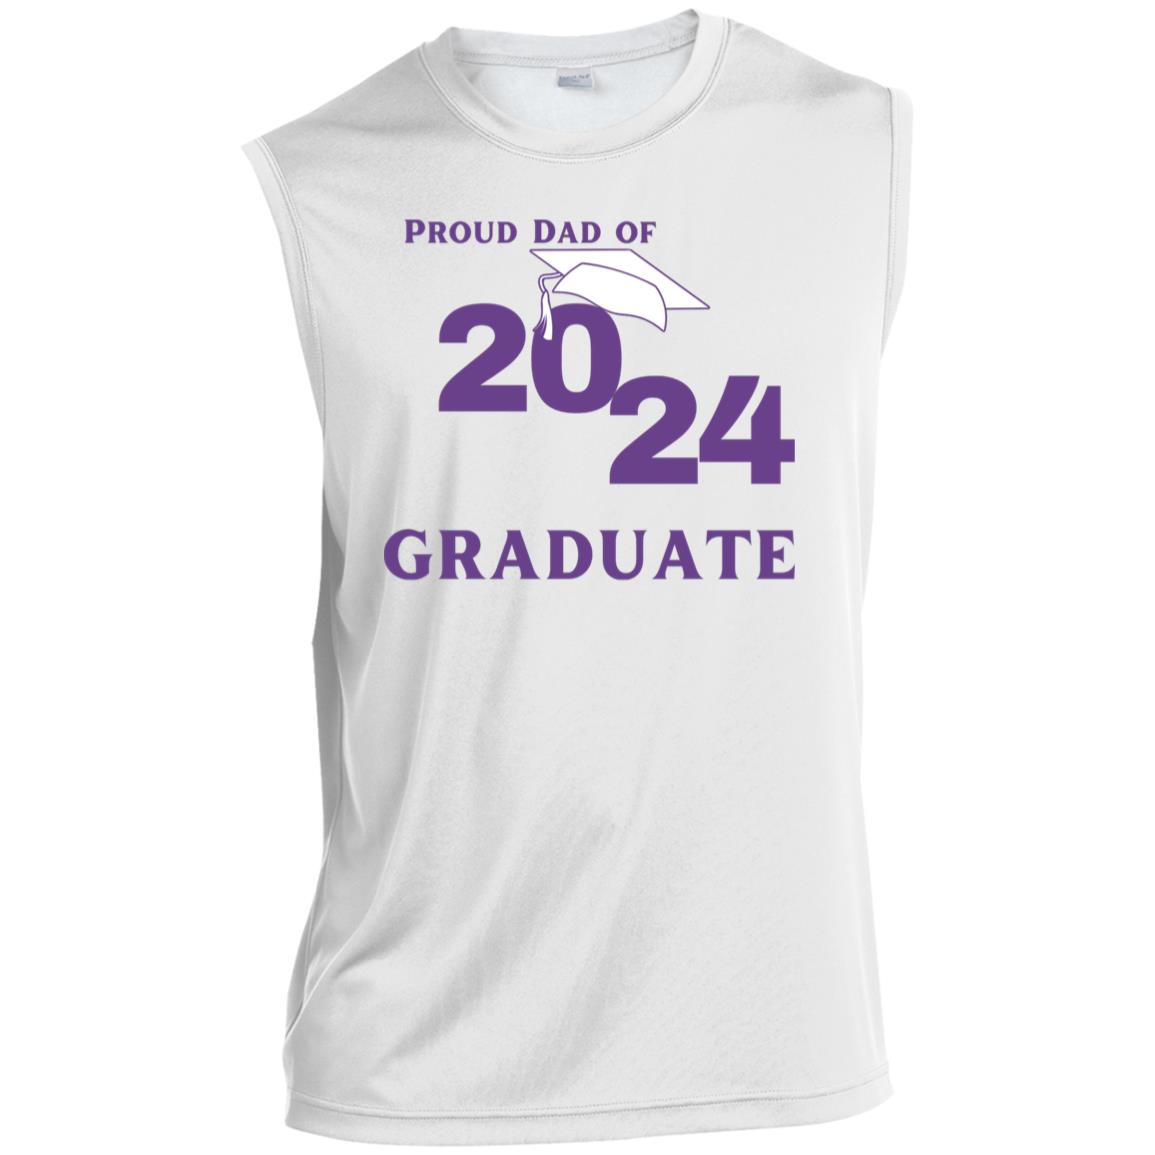 Proud Dad -- Graduate 2024 -- Men’s Sleeveless Performance Tee